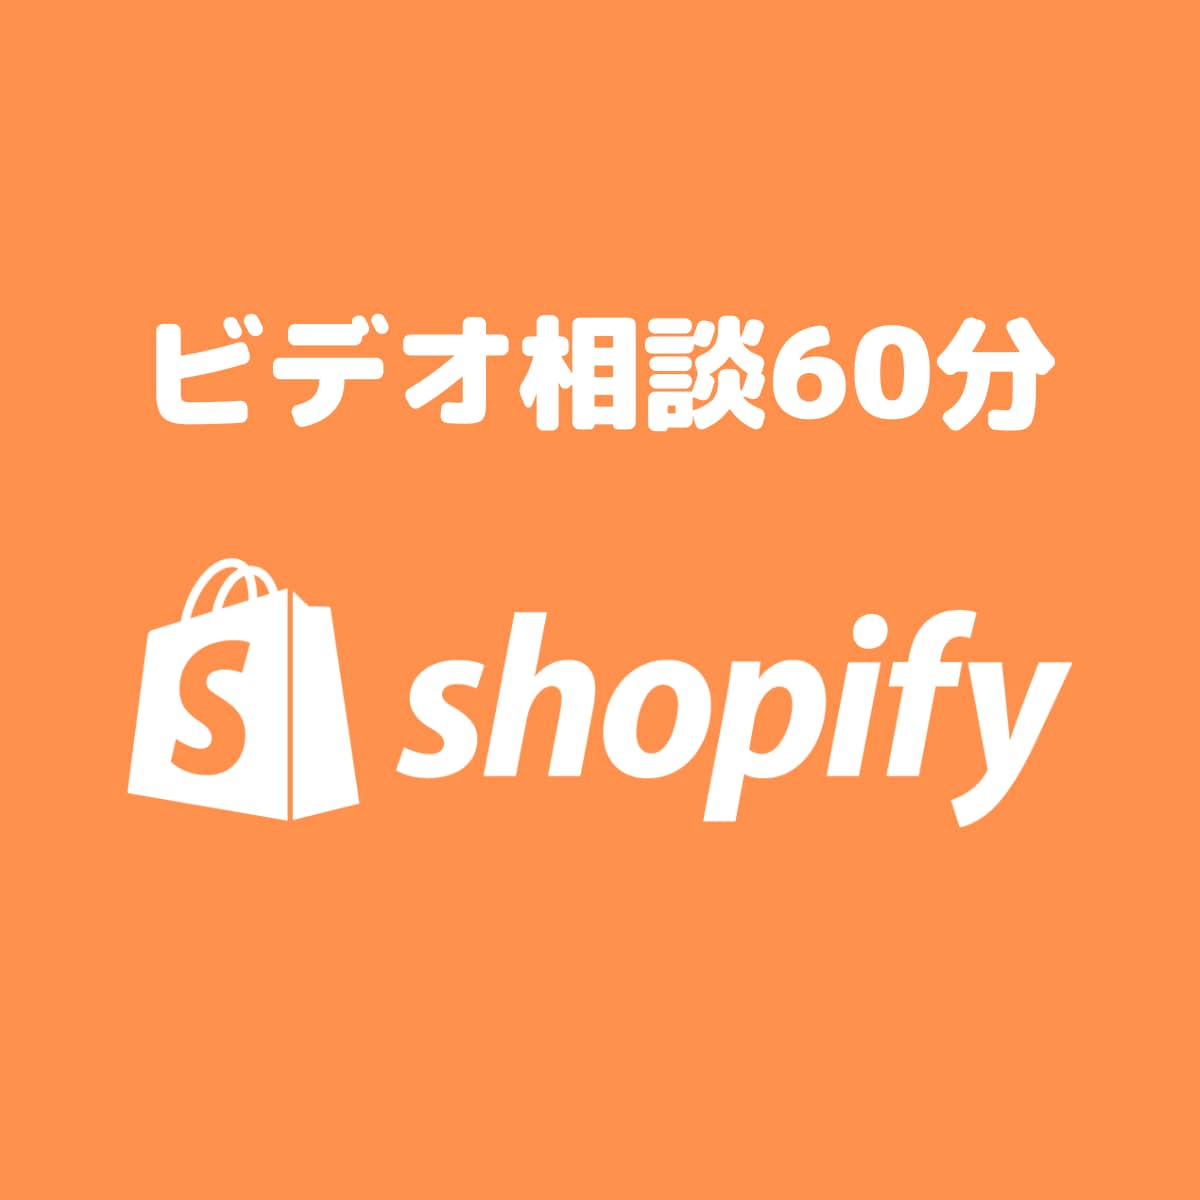 Shopifyサイトのビデオ相談を承ります 他教育サービスにてShopify指導実績１位。 イメージ1